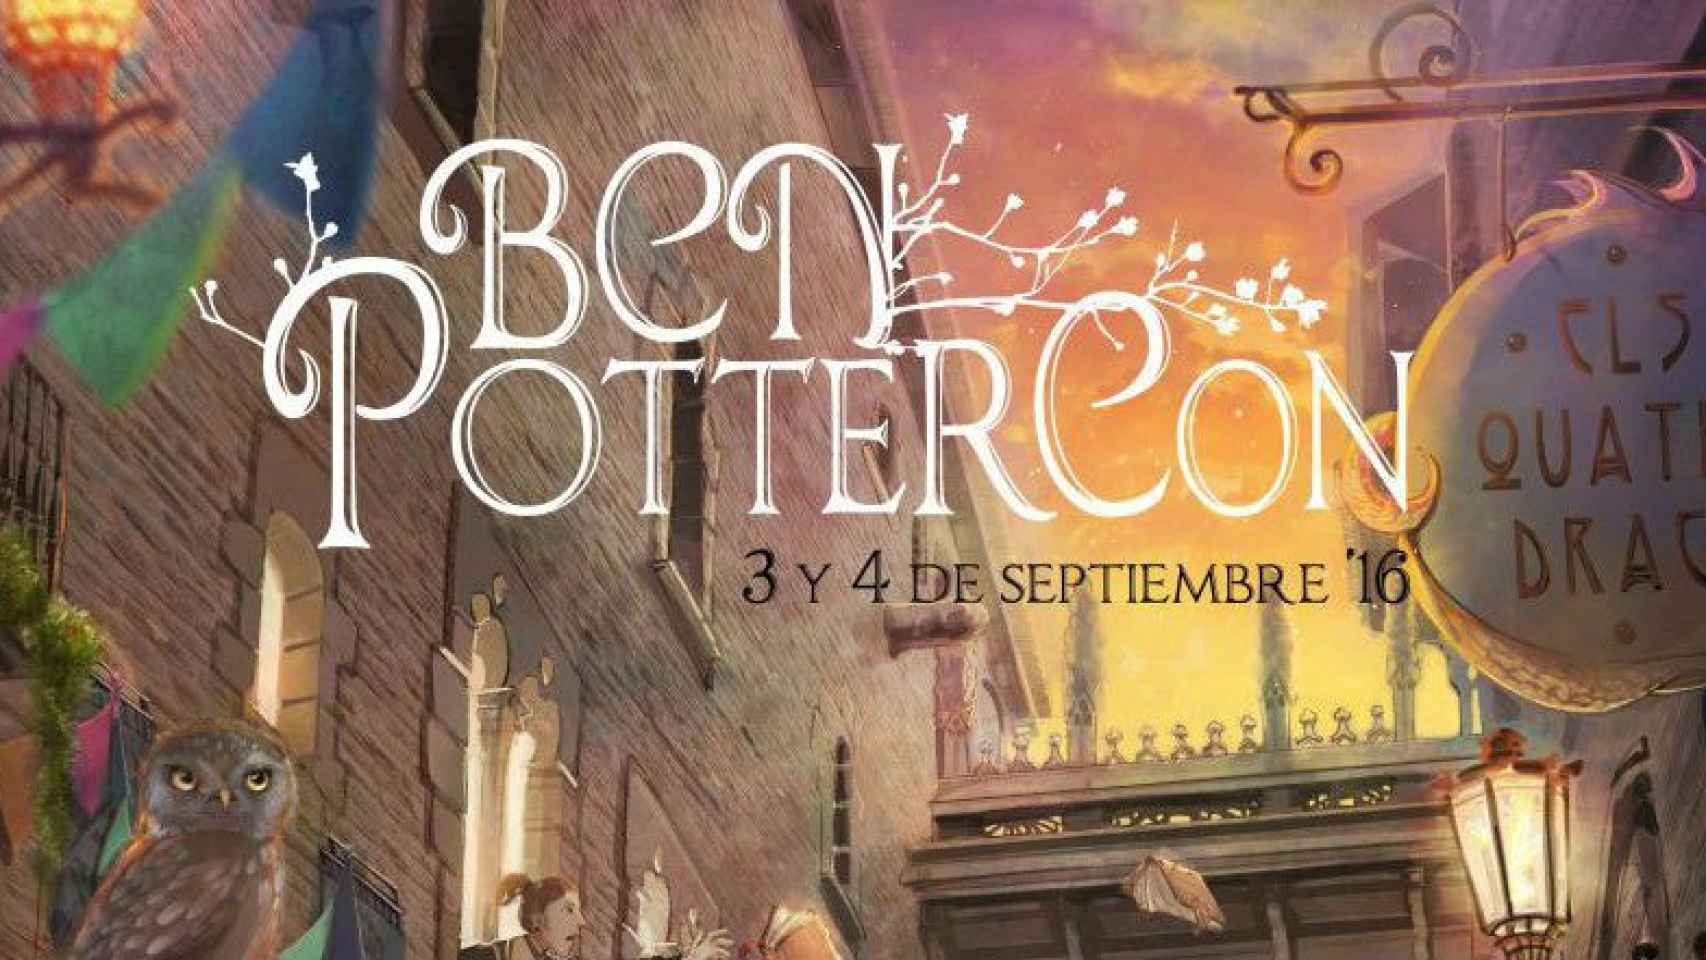 BCN PotterCon